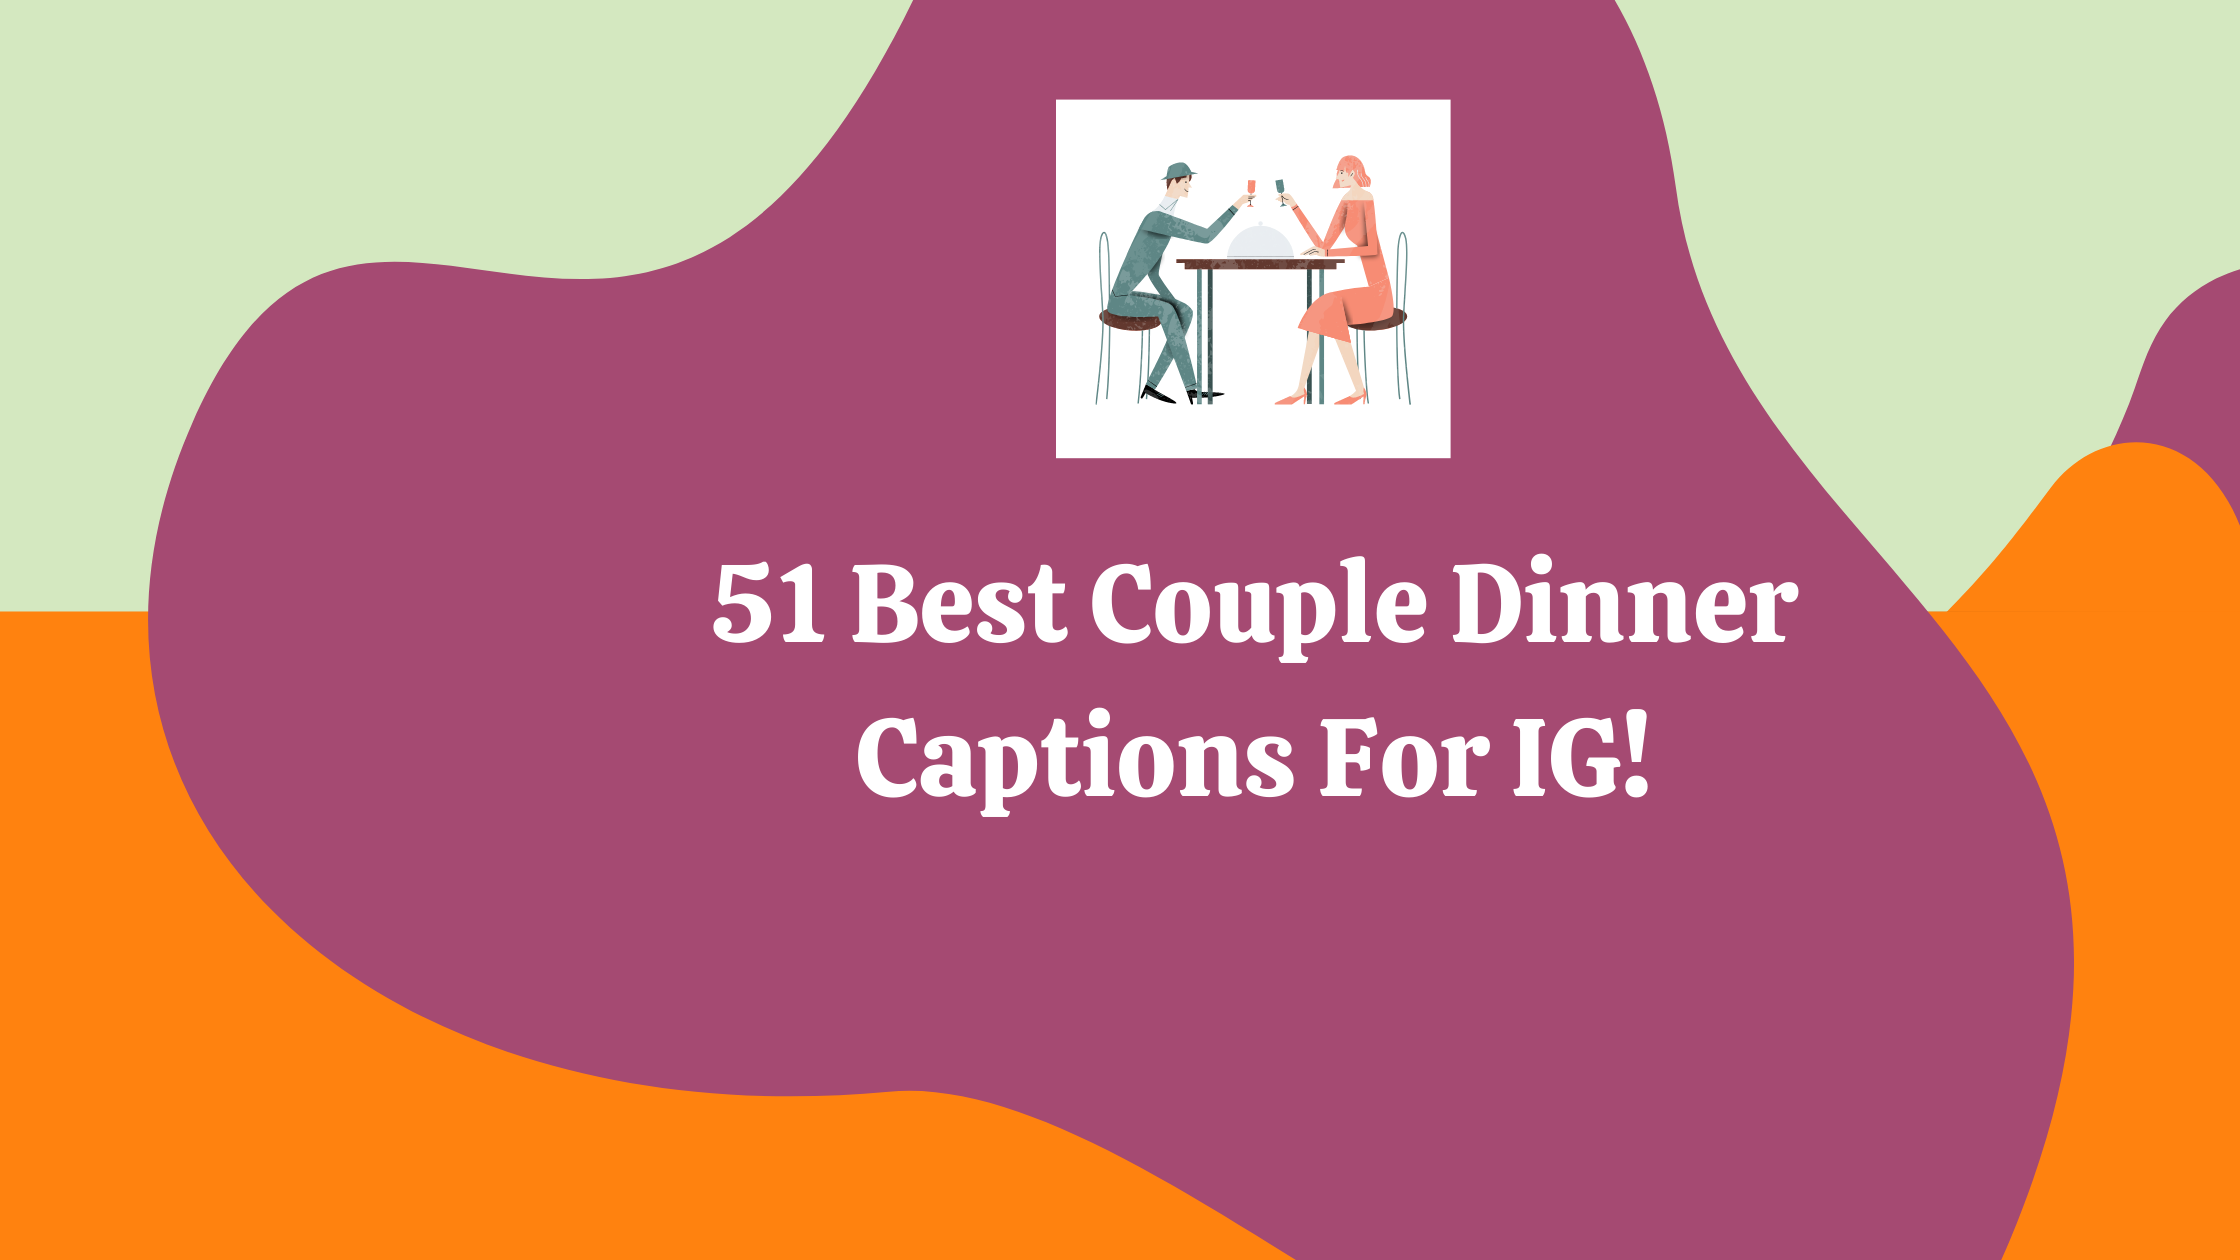 59 Romantic Couple Dinner Captions For Instagram!